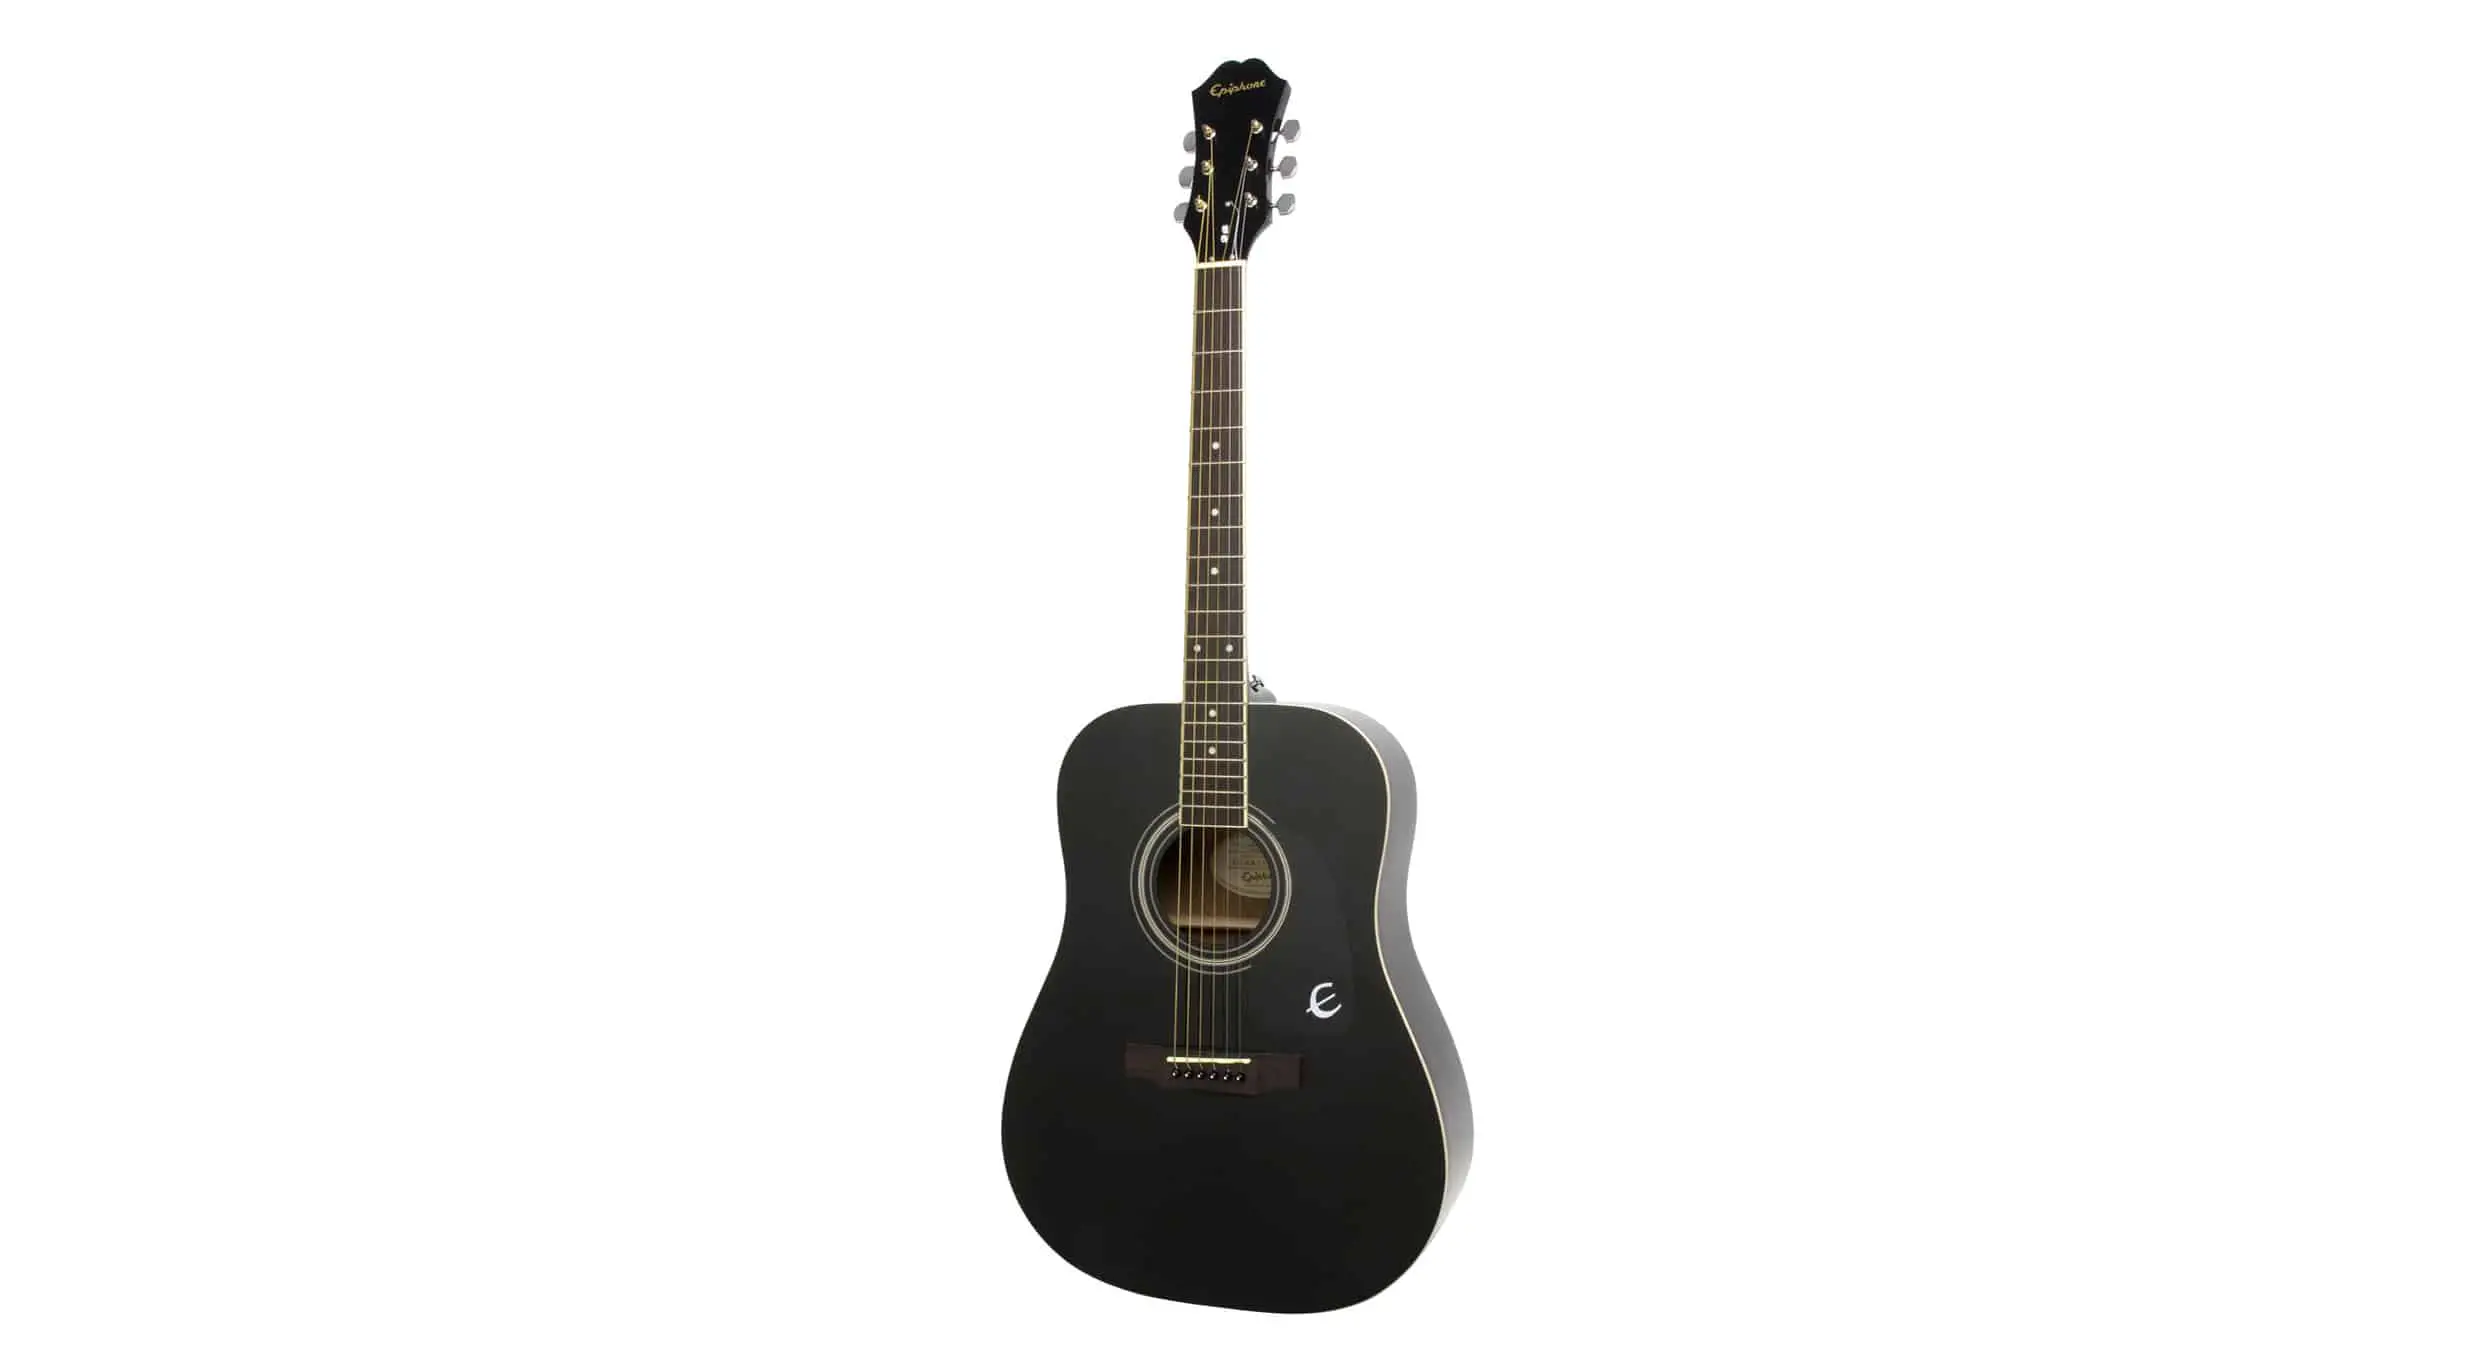 Epiphone DR 100 Acoustic Guitar Review